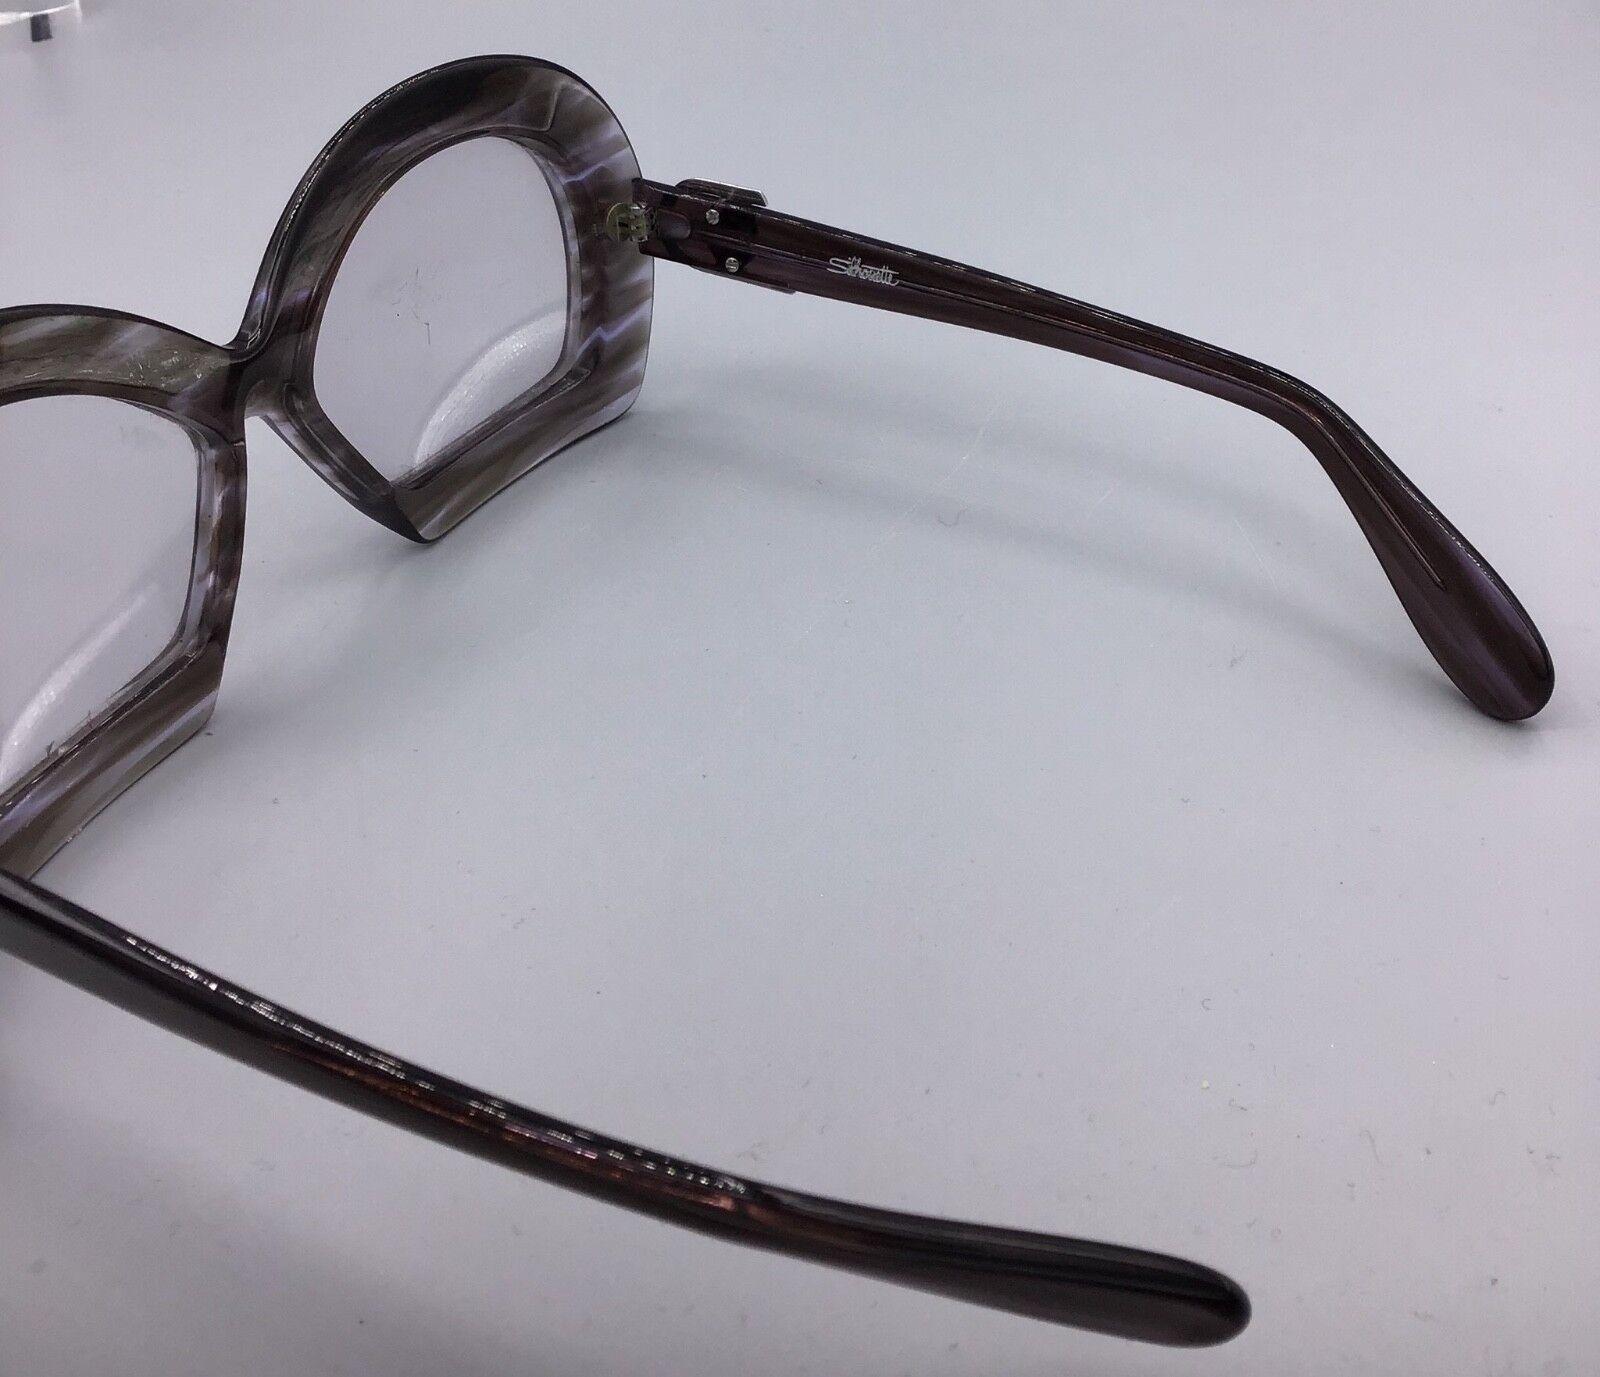 SILHOUETTE occhiale vintage Silhouette eyewear frame glasses lunettes brillen